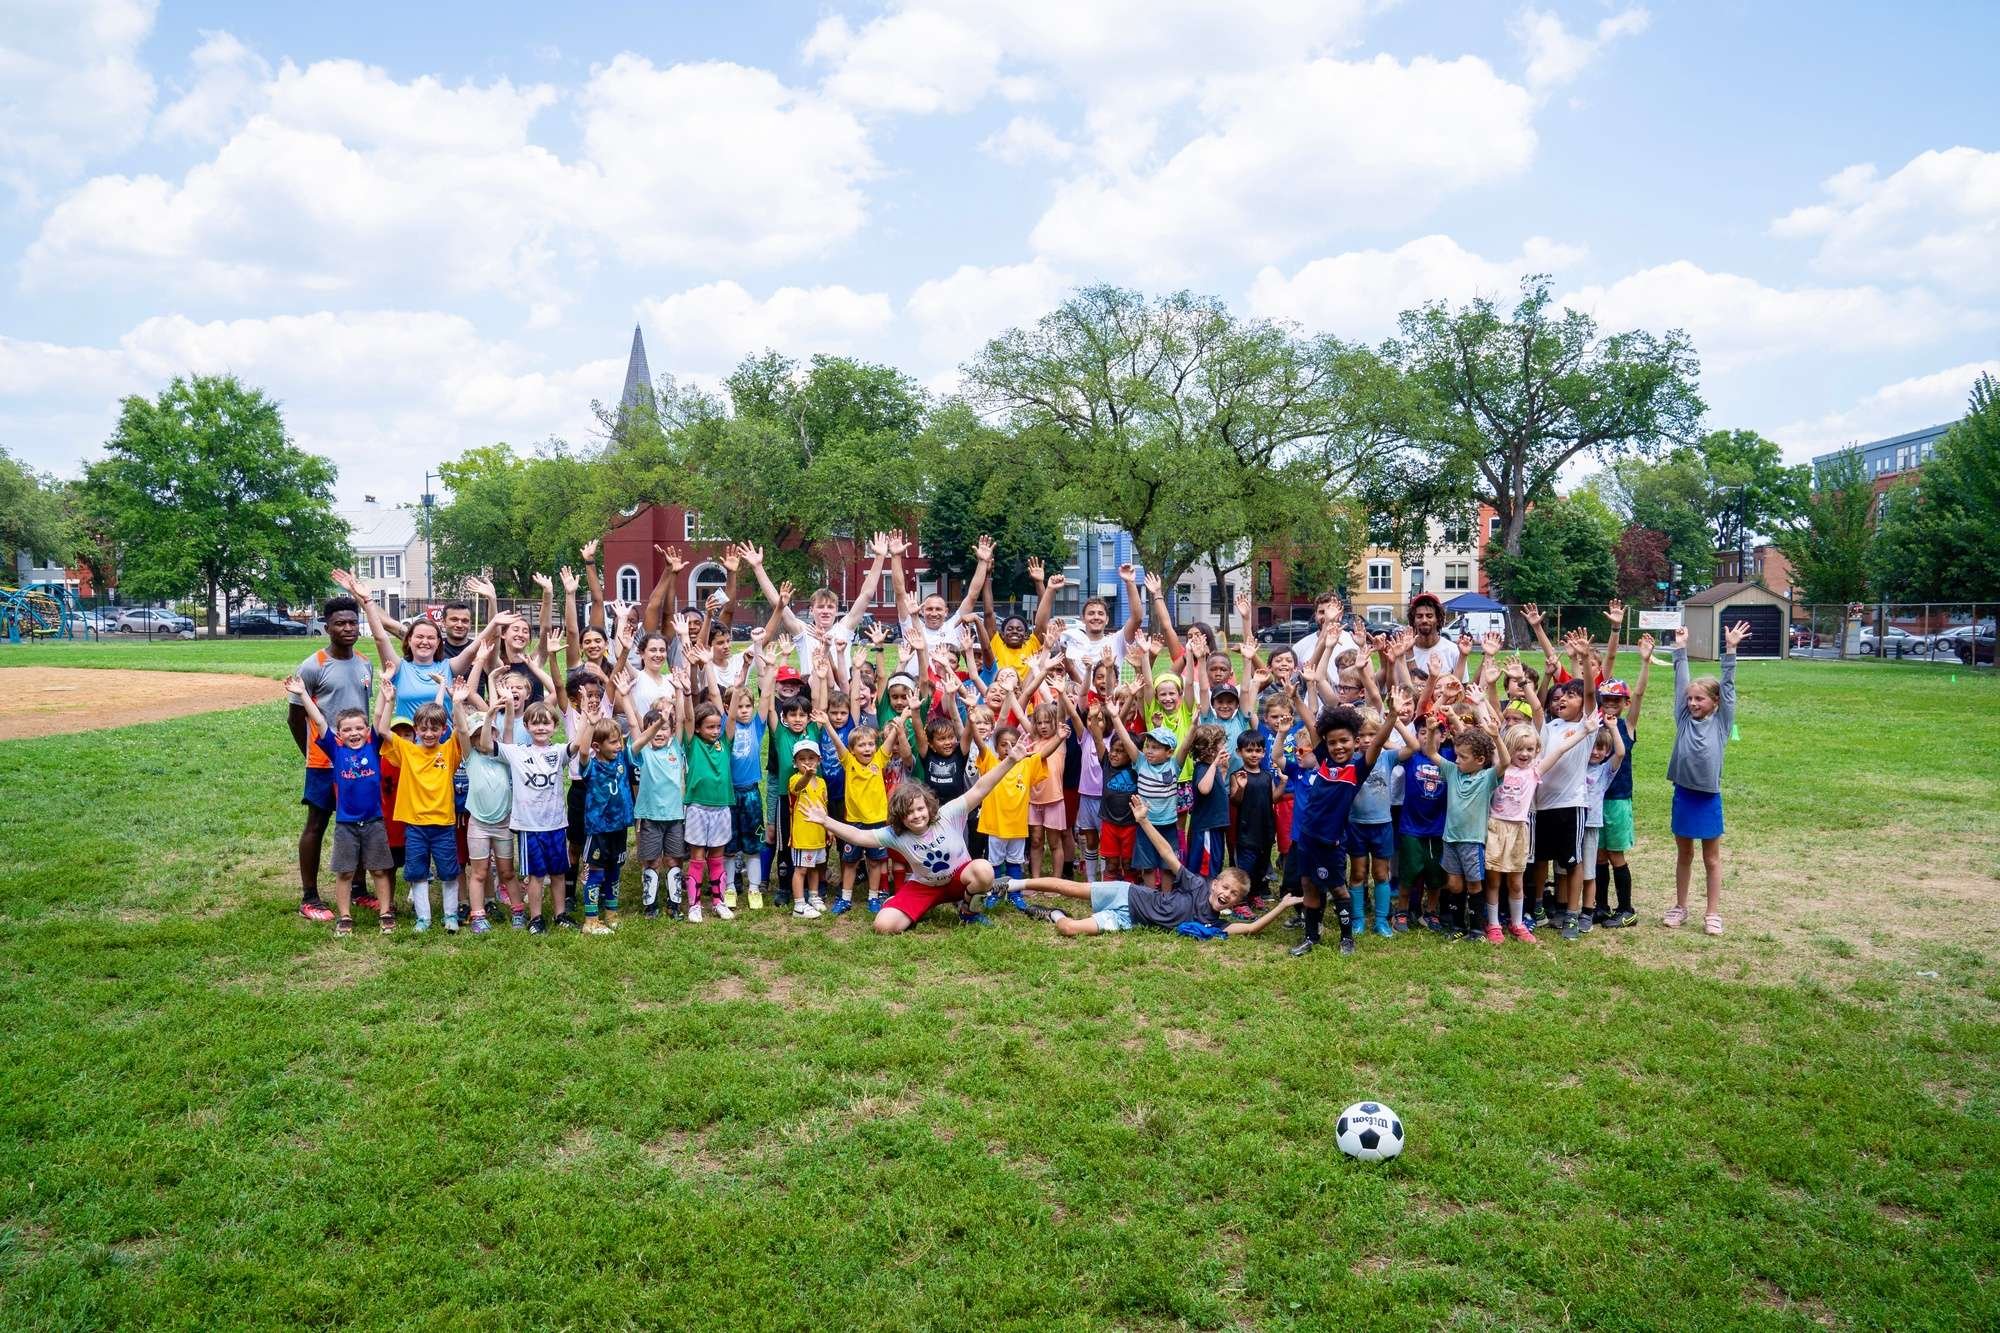 Dc-way-soccer-club-for-kids-in-washington-dc-summer-camp-at-tyler-elementary-school- 0025.jpg